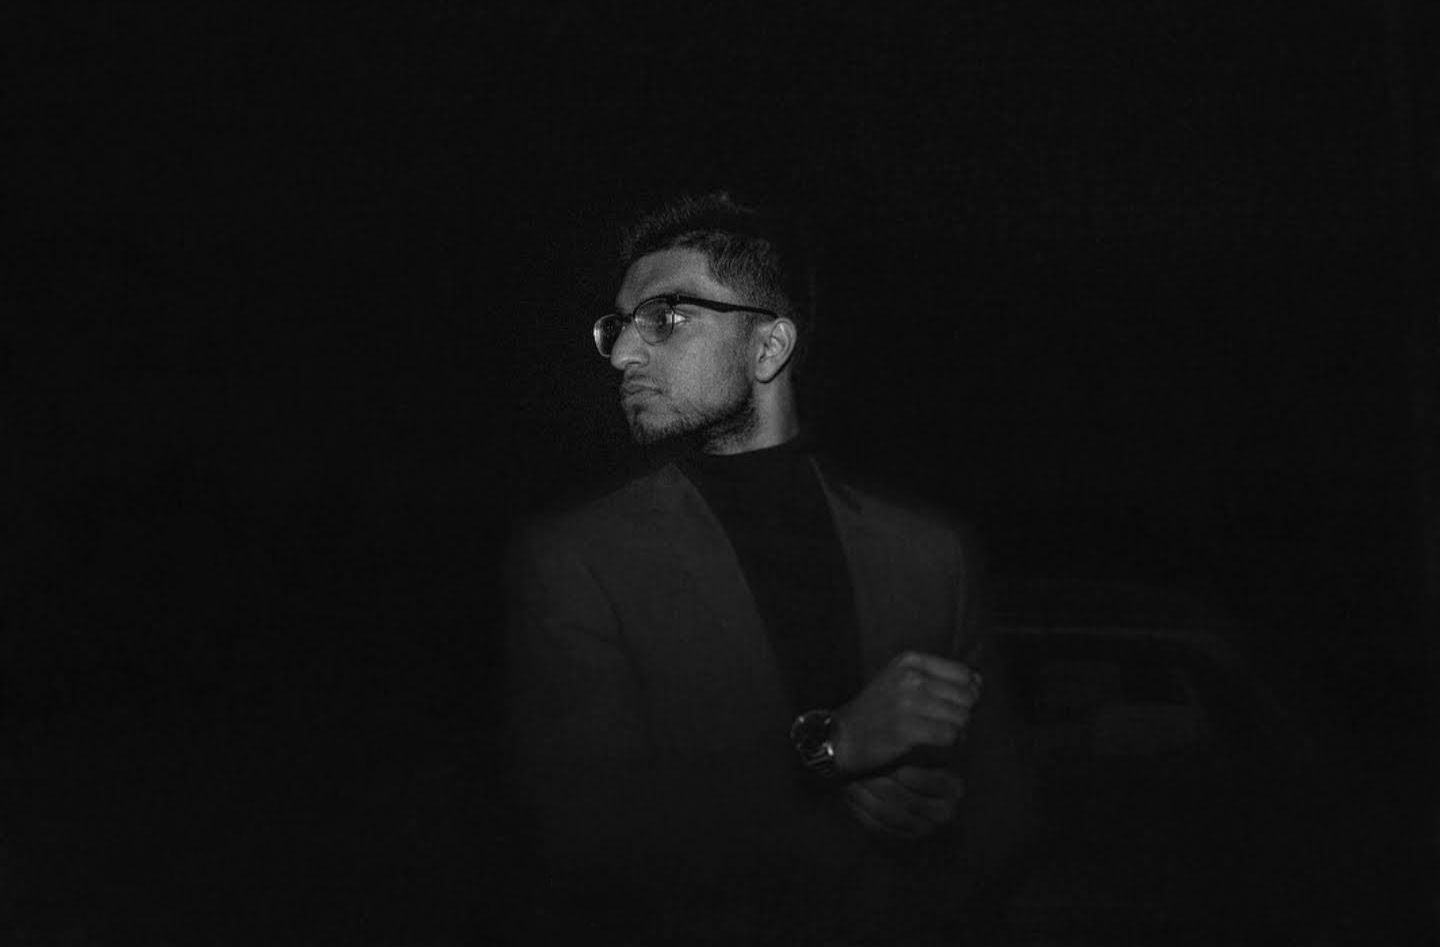 man in suit in dark